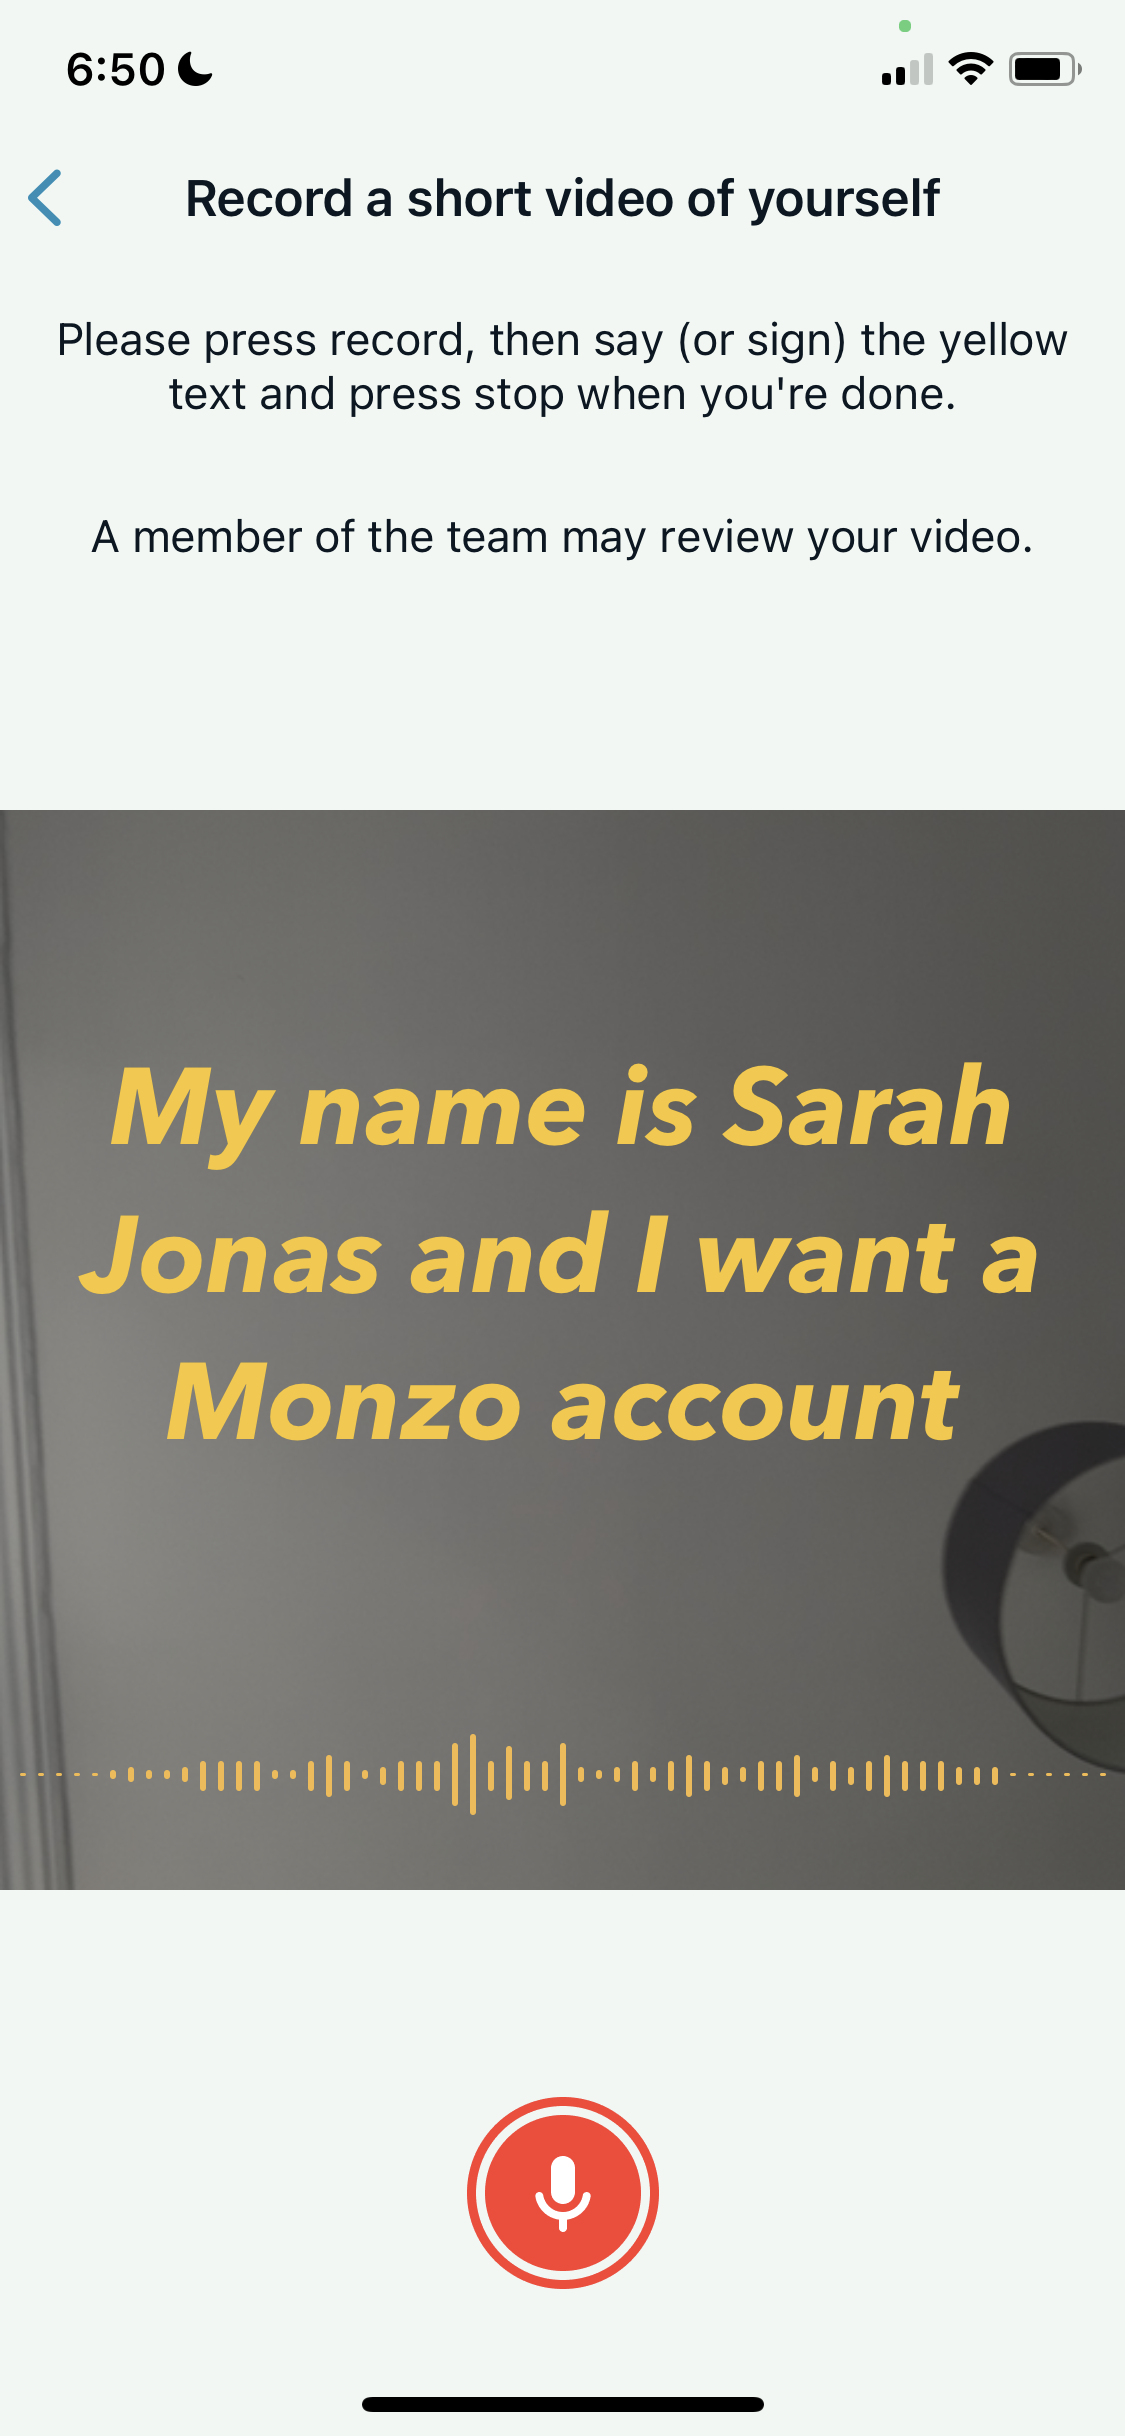 Monzo record video of self screenshot